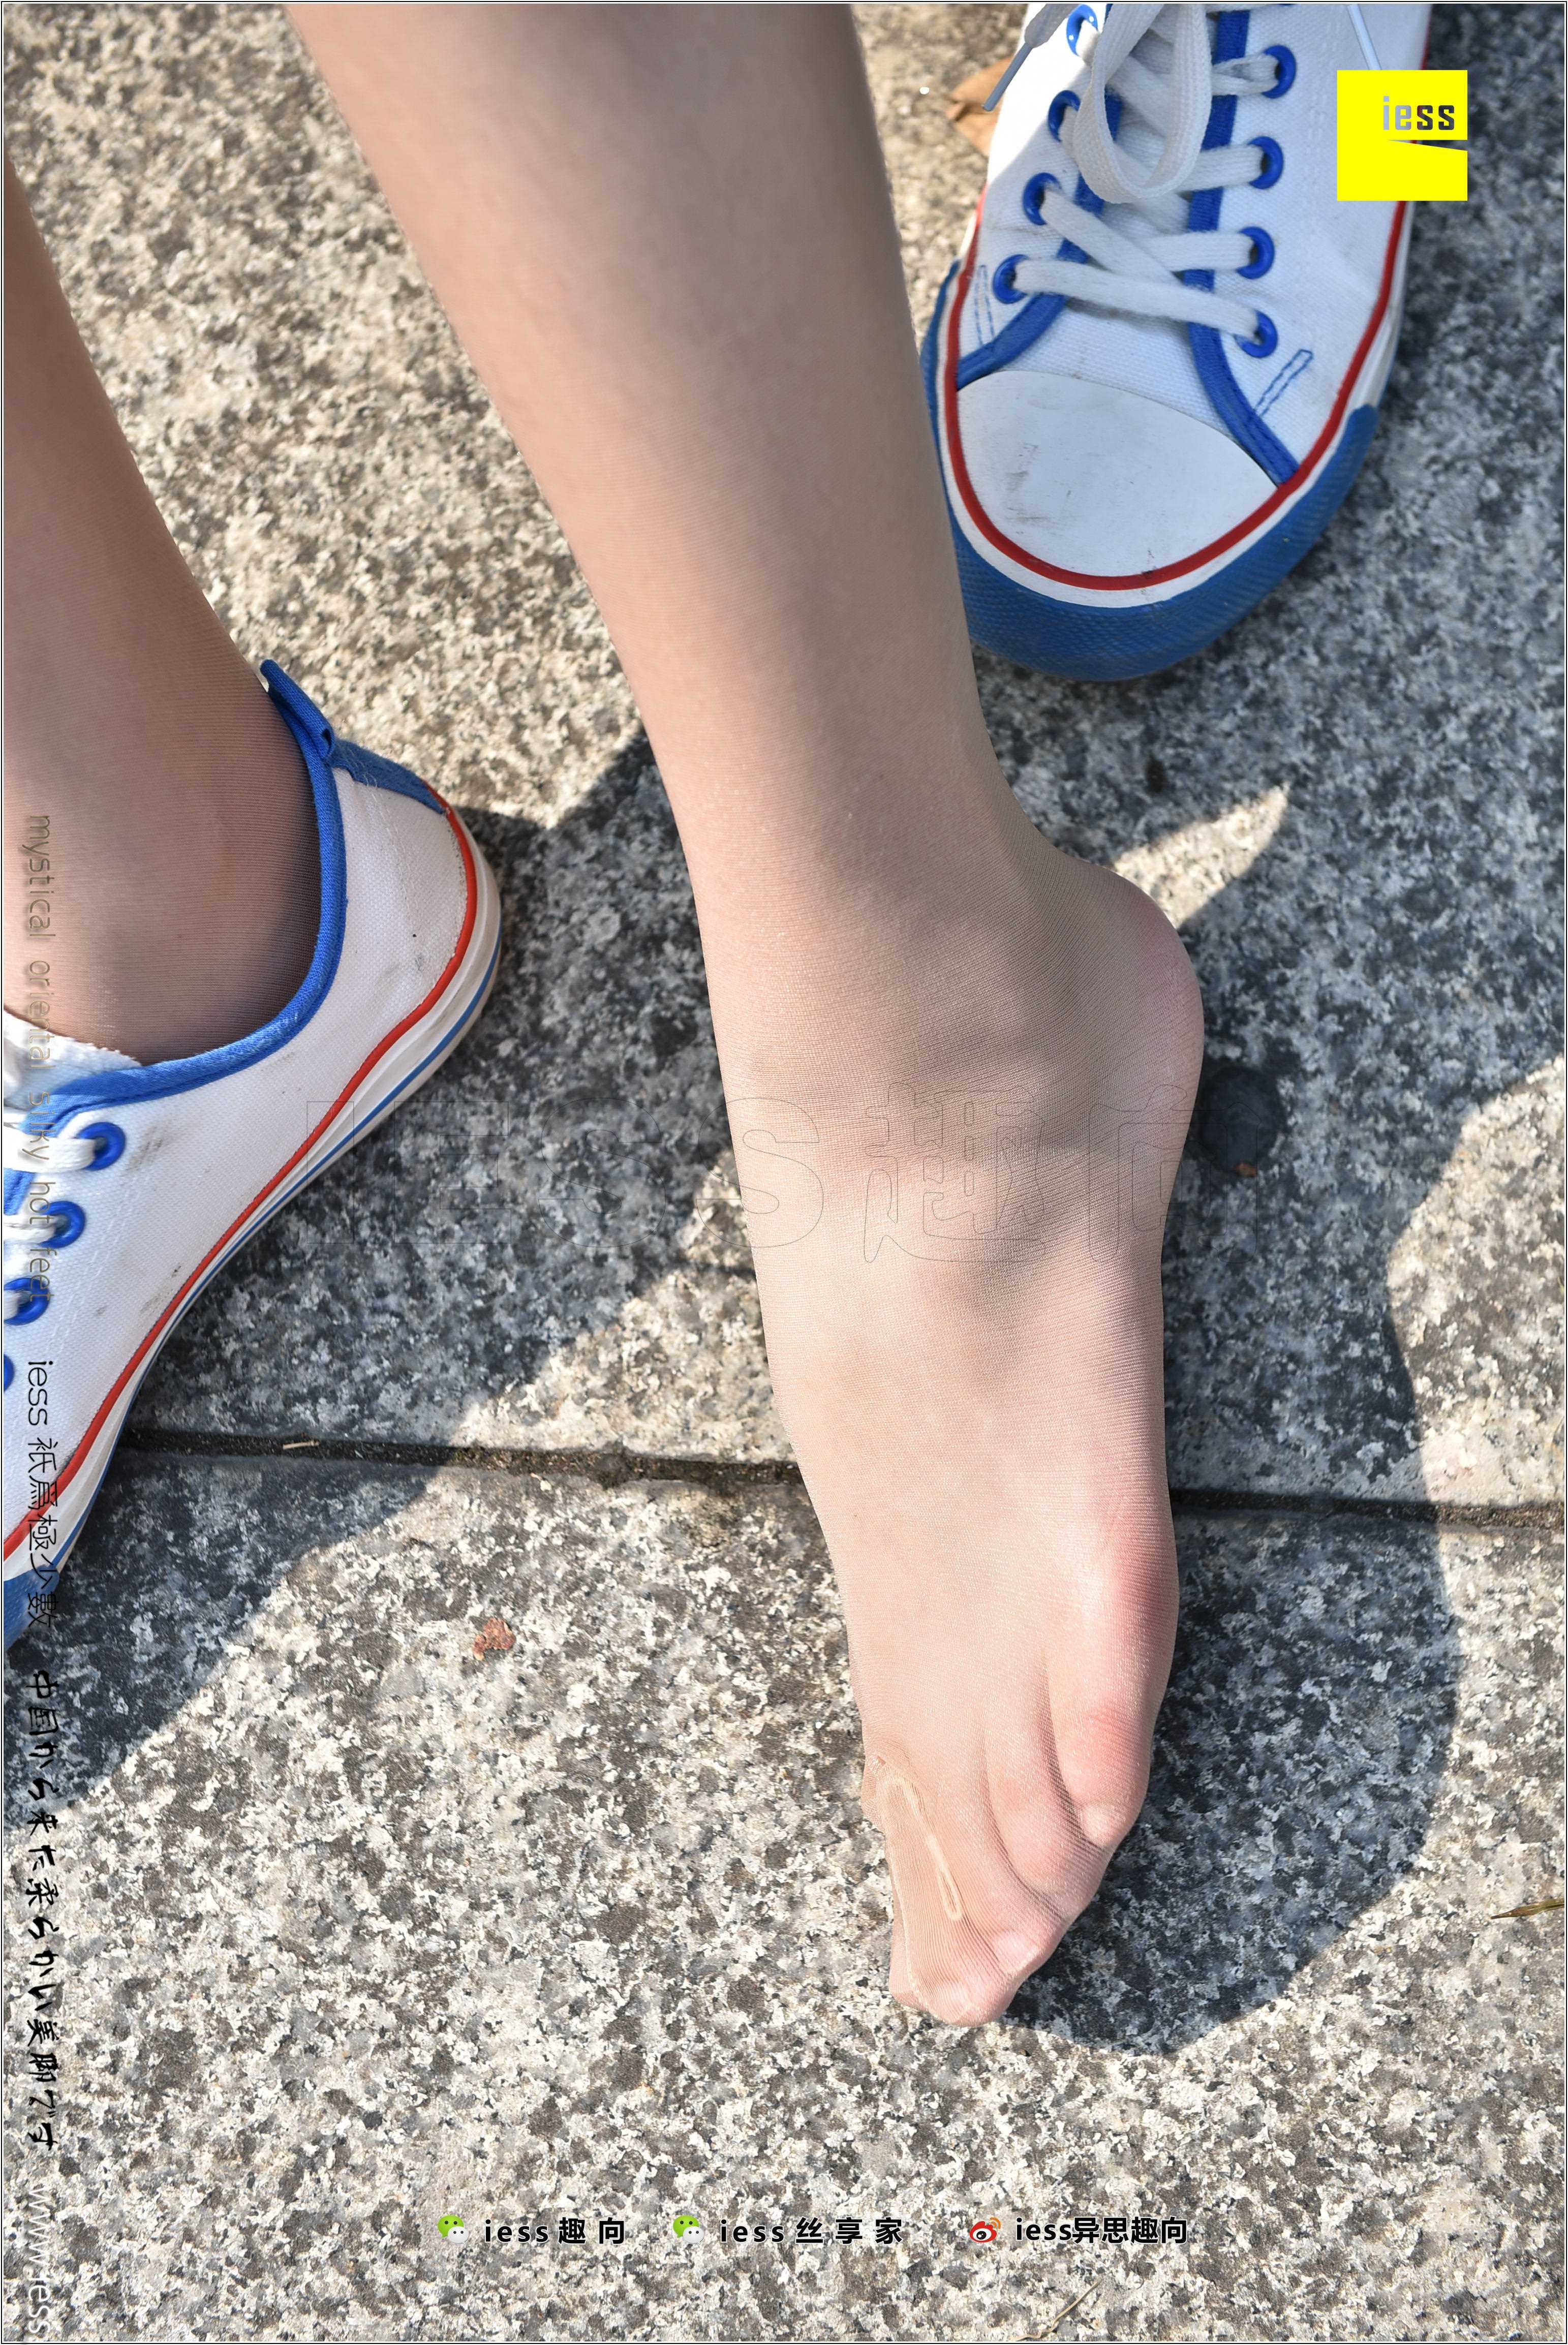 China Beauty Legs and feet 281